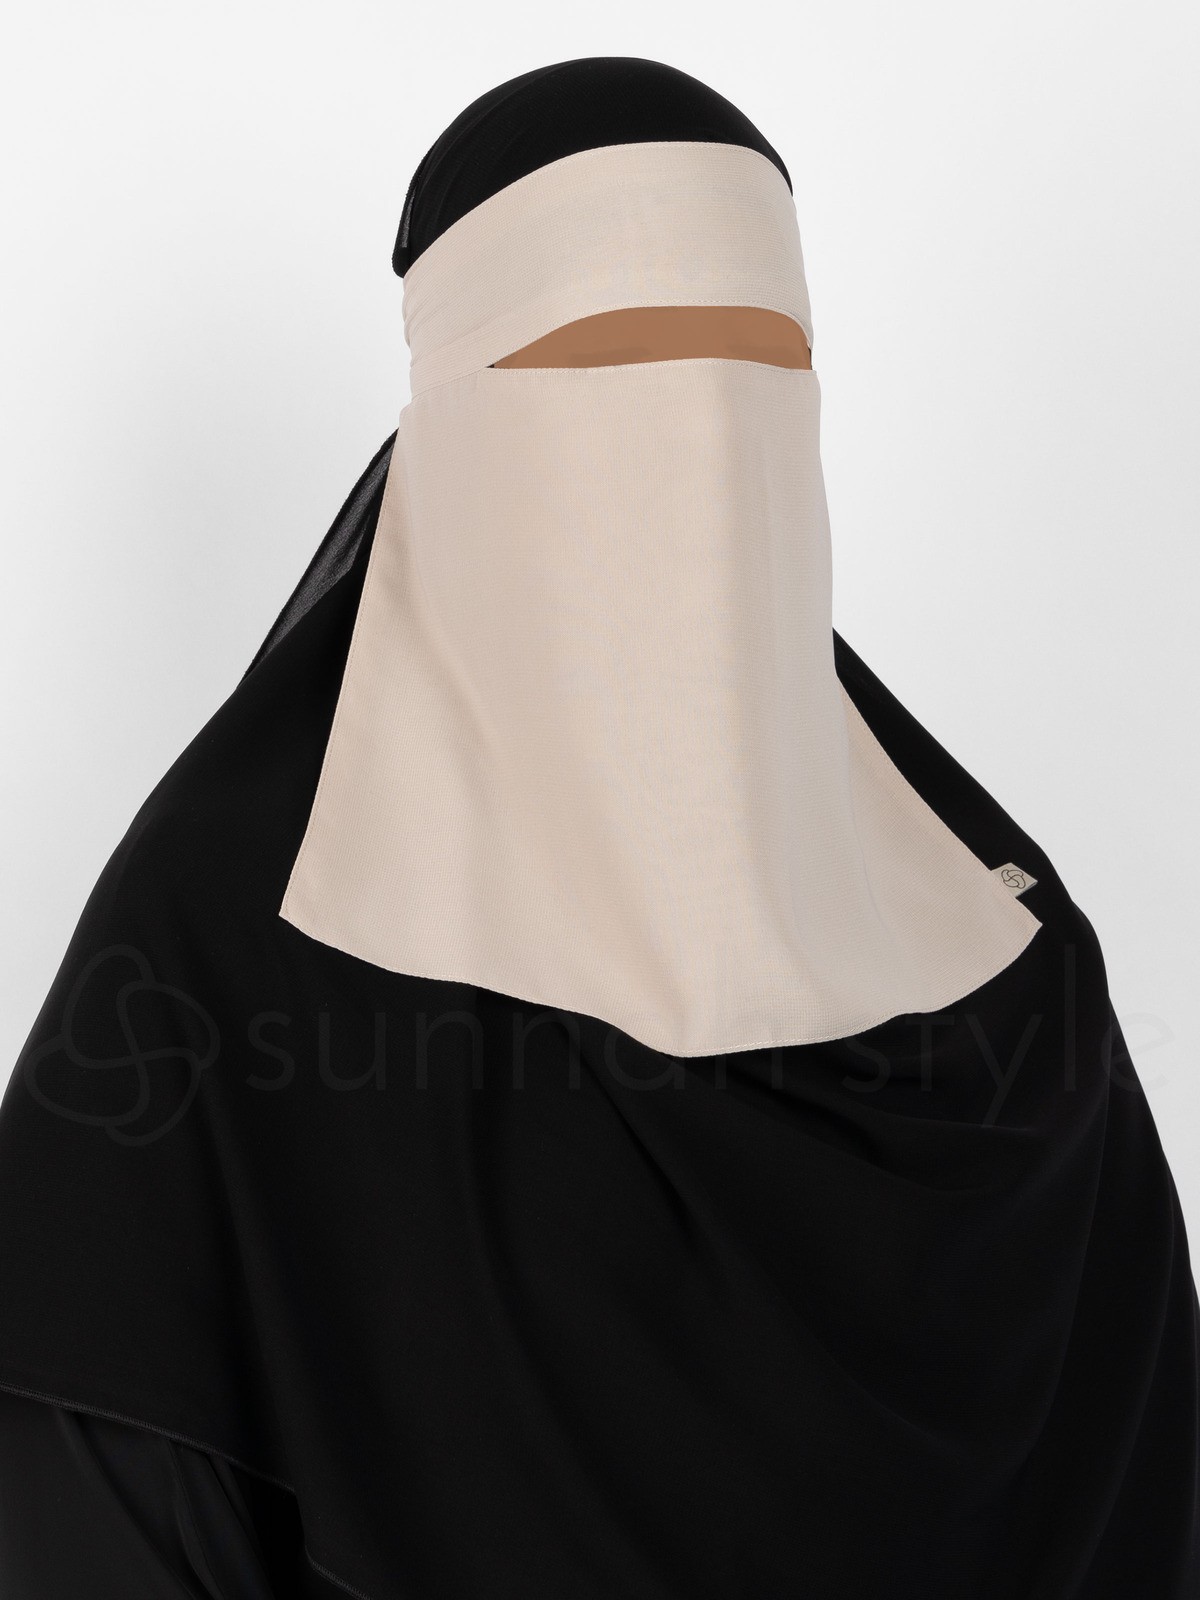 Sunnah Style - Short One Layer Niqab (Sahara)